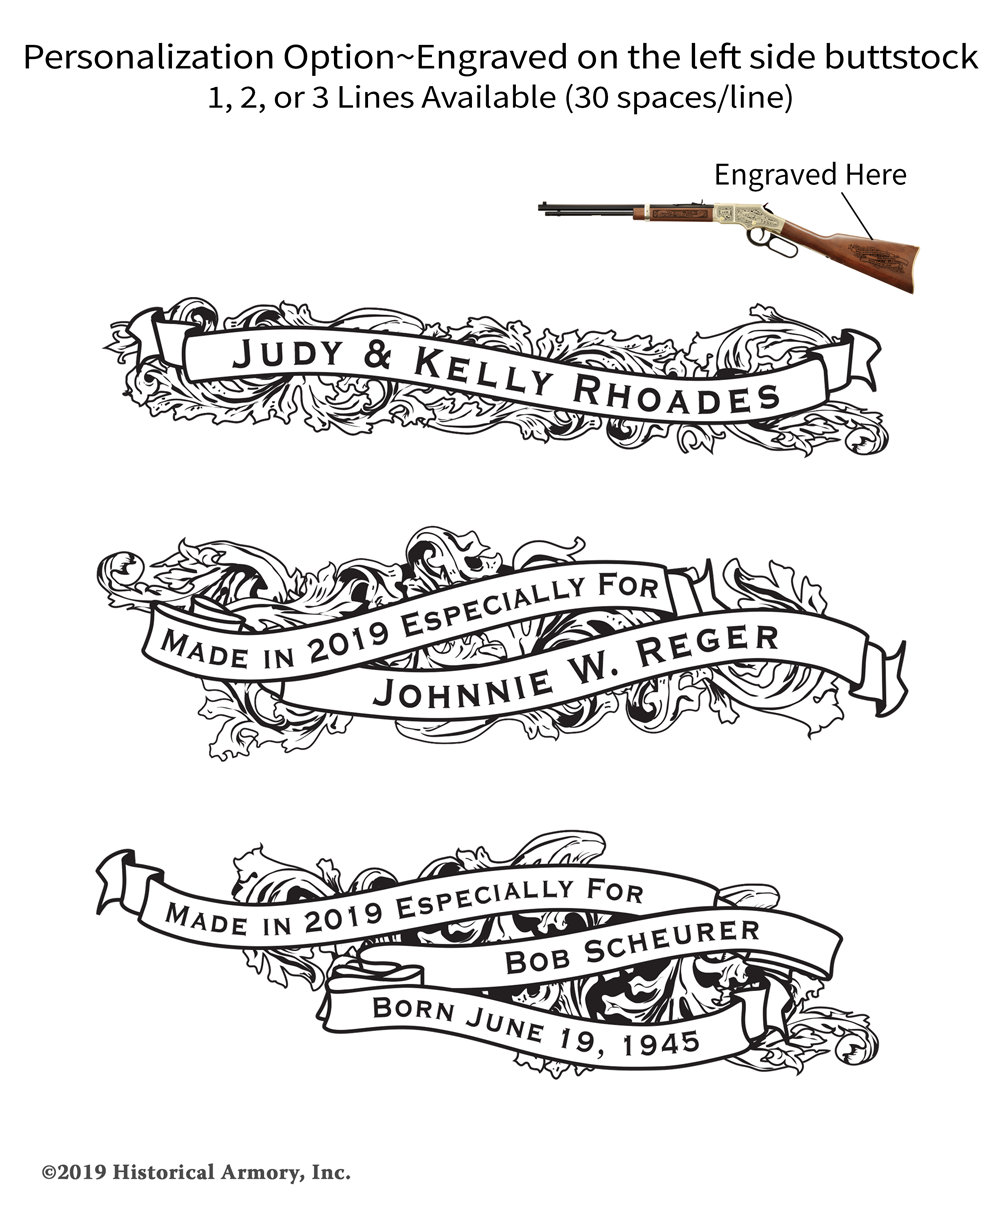 Banks County Georgia Engraved Rifle